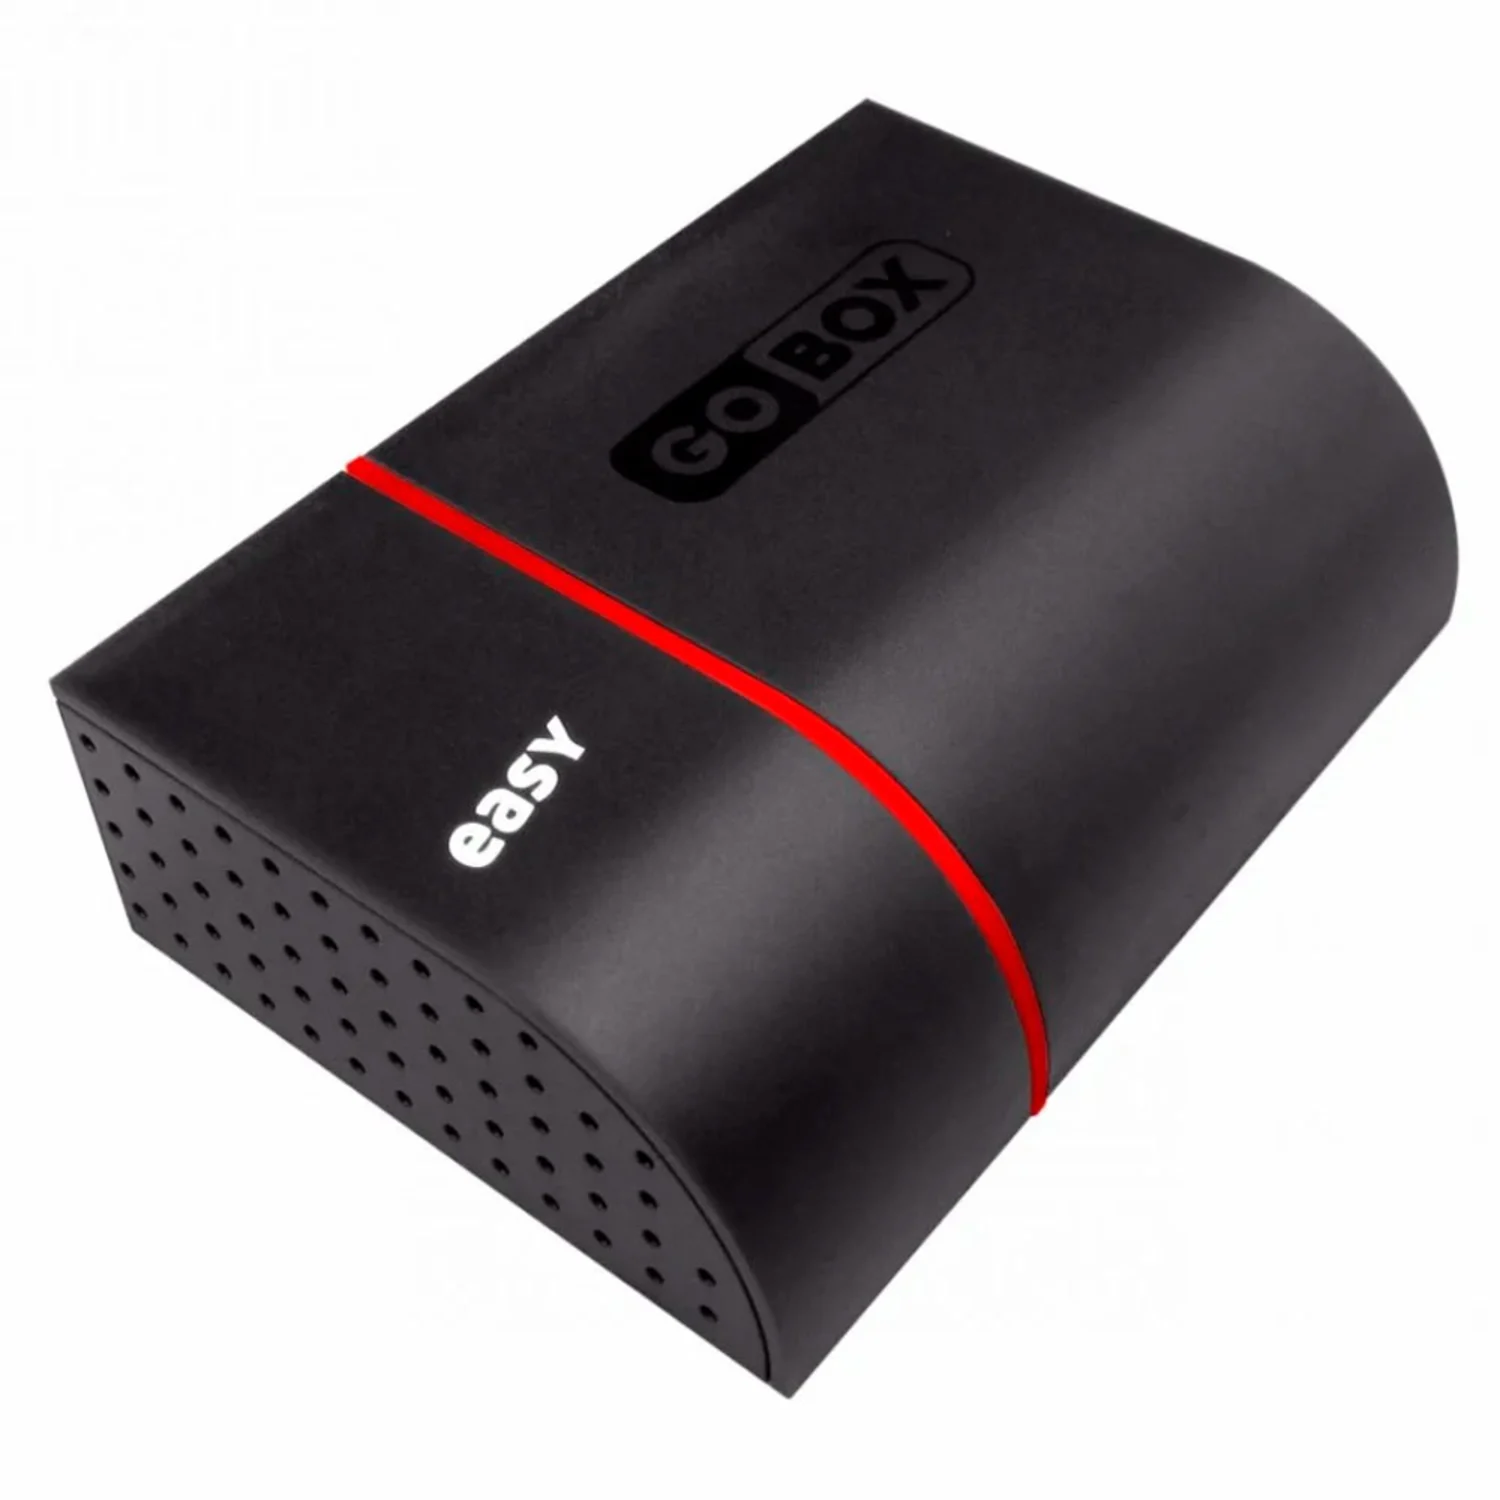 Receptor Gobox Easy 4K 8GB 1GB RAM Wi-Fi - Preto